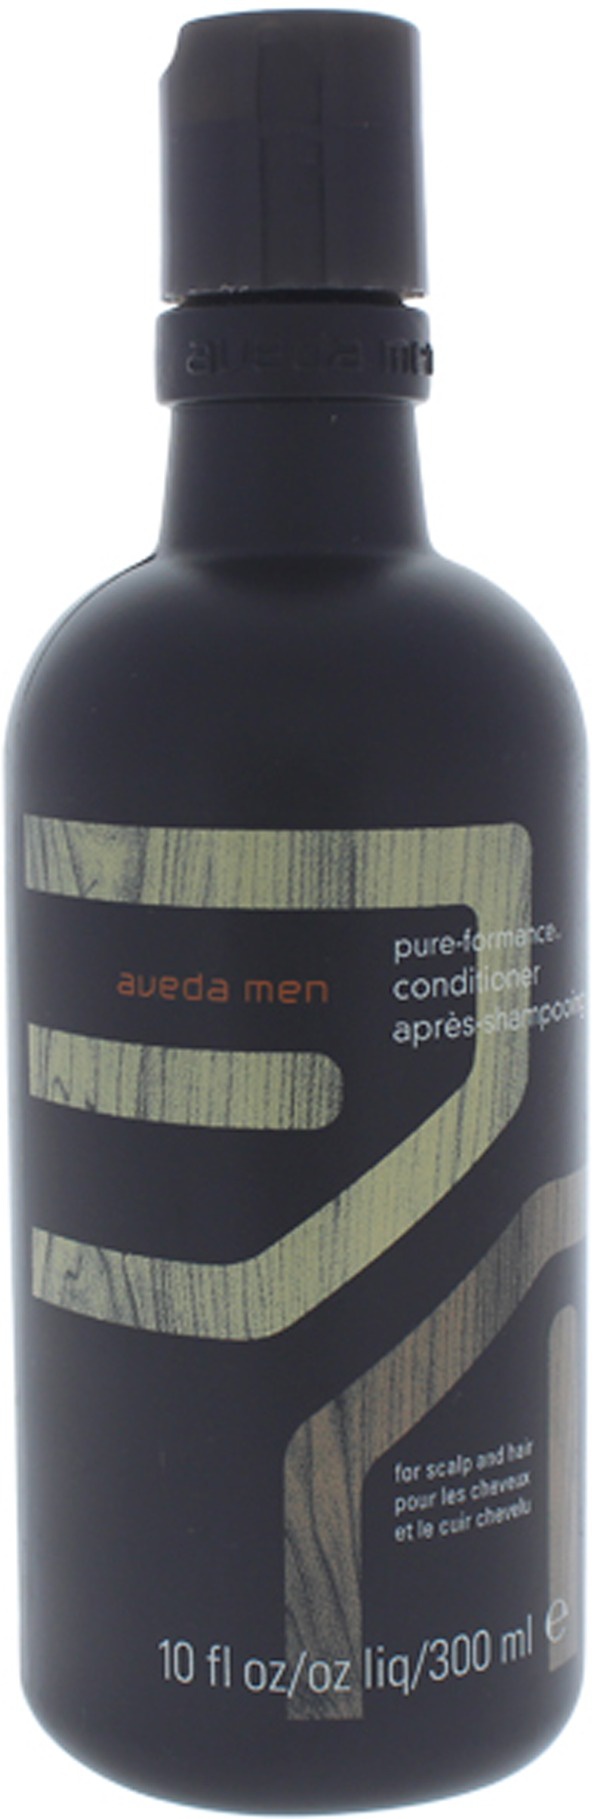 Aveda Pure-Formance Conditioner